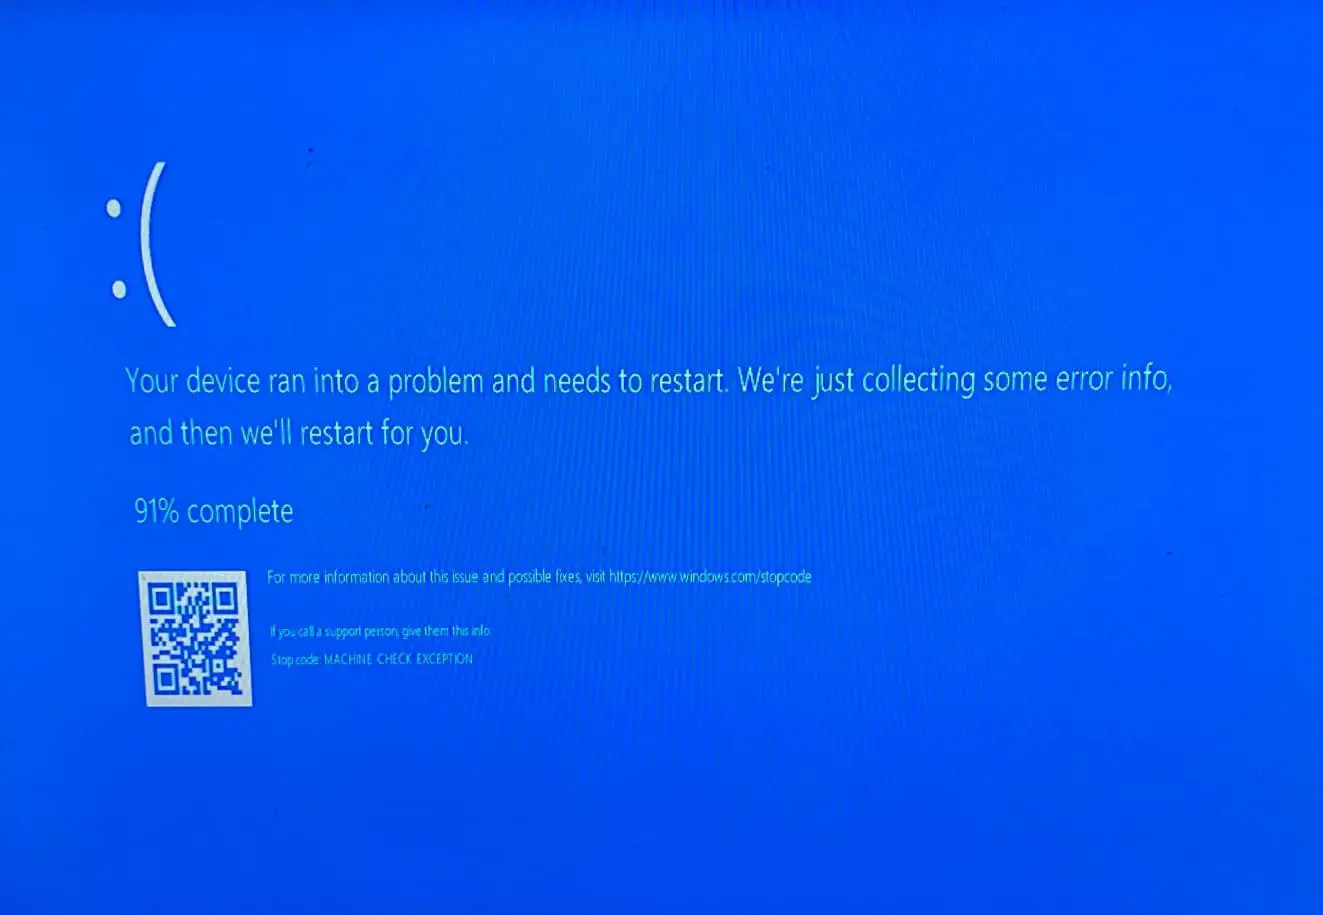 Solved: Machine check exception windows 10 Blue screen error